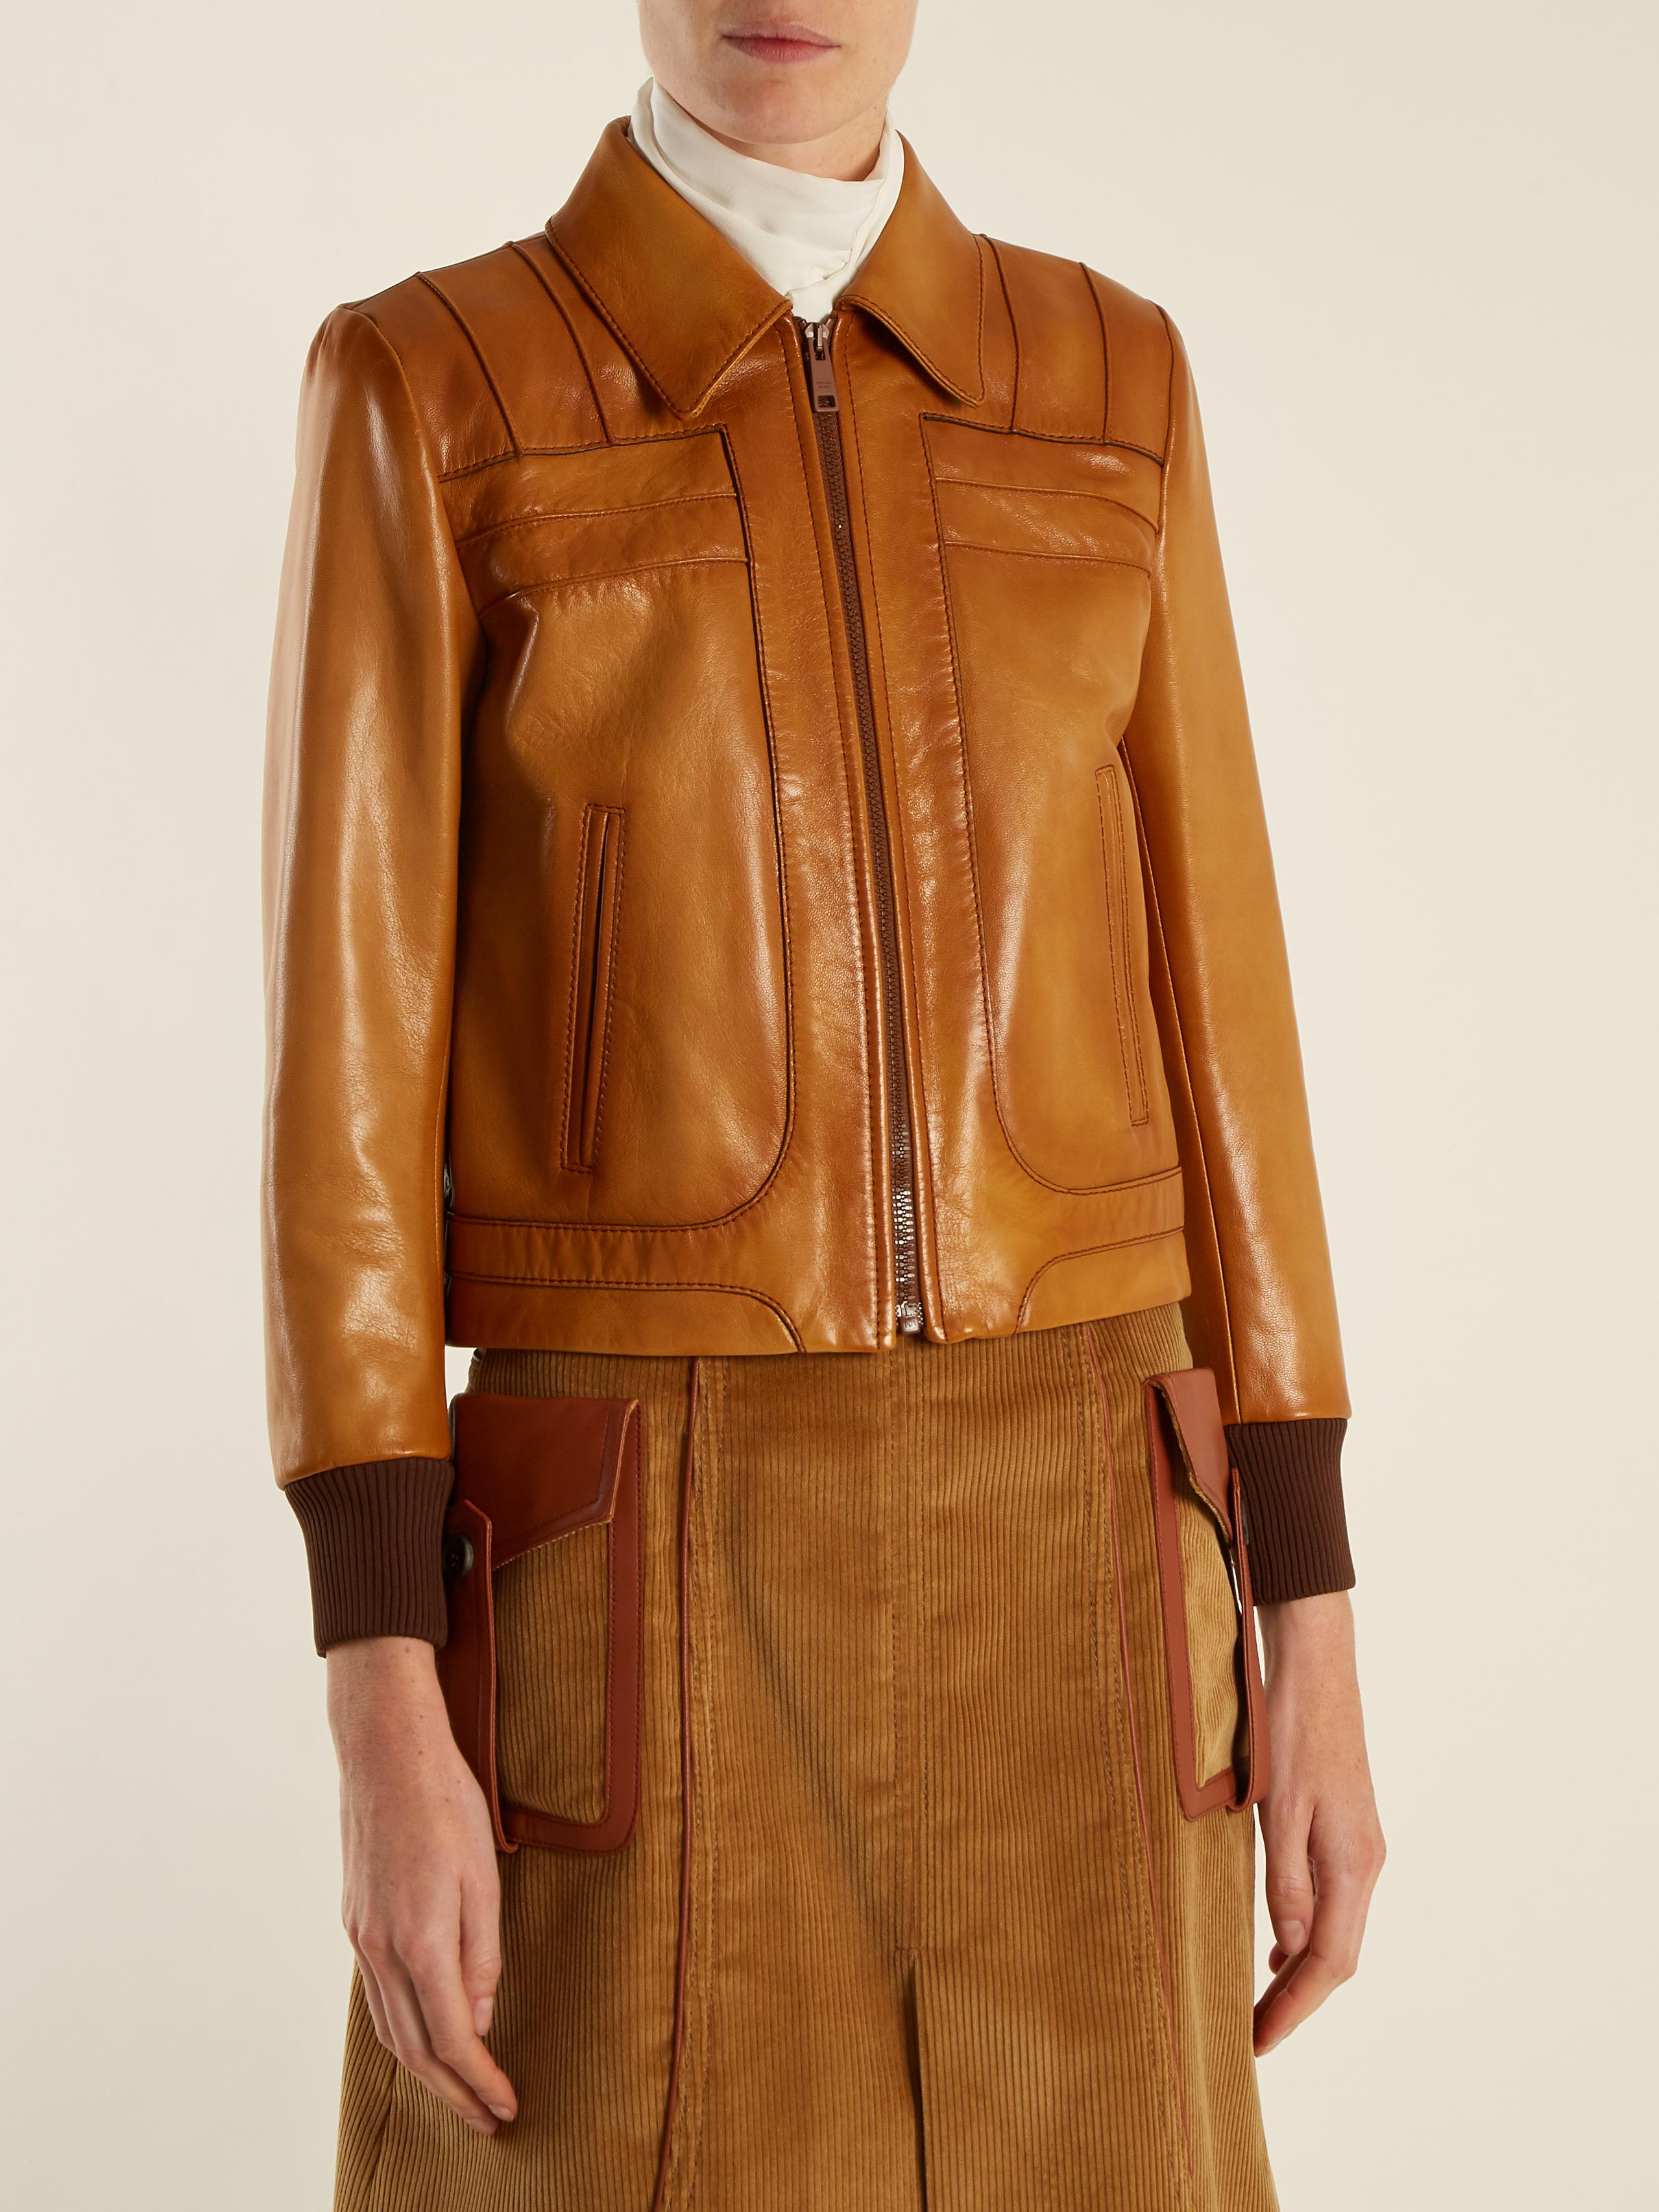 Prada Zip-through Leather Jacket in Brown - Lyst